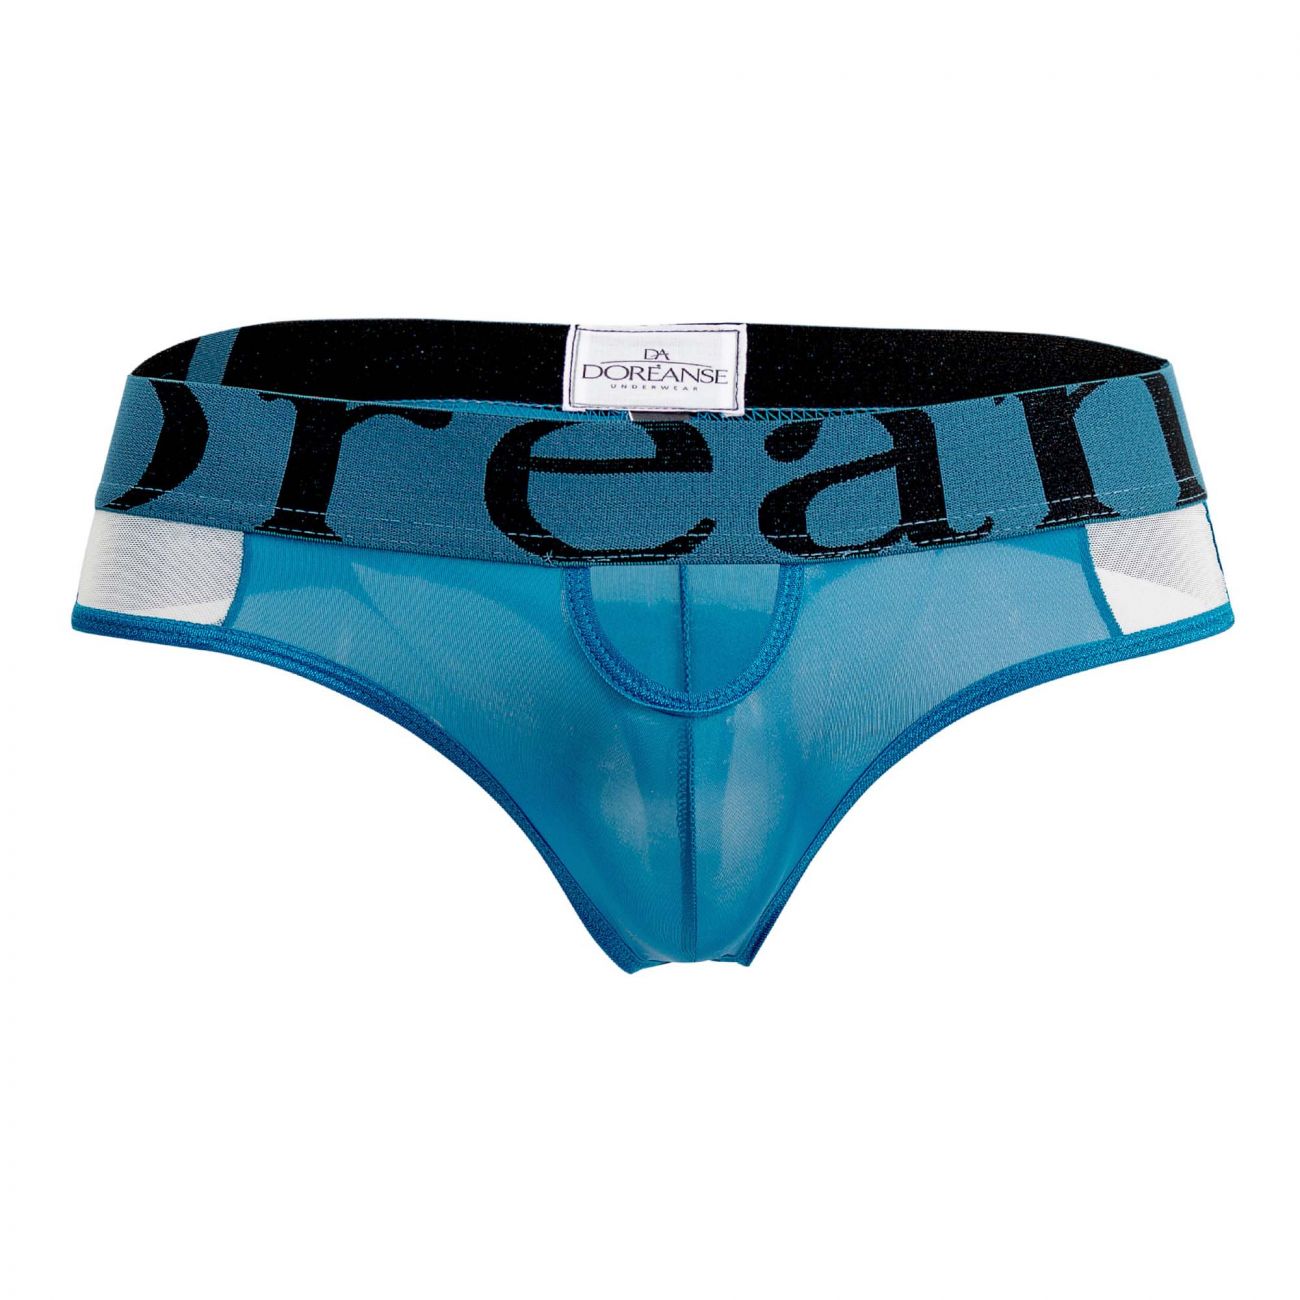 Mens Underwear: Doreanse 1224-EMR Window Thongs | eBay